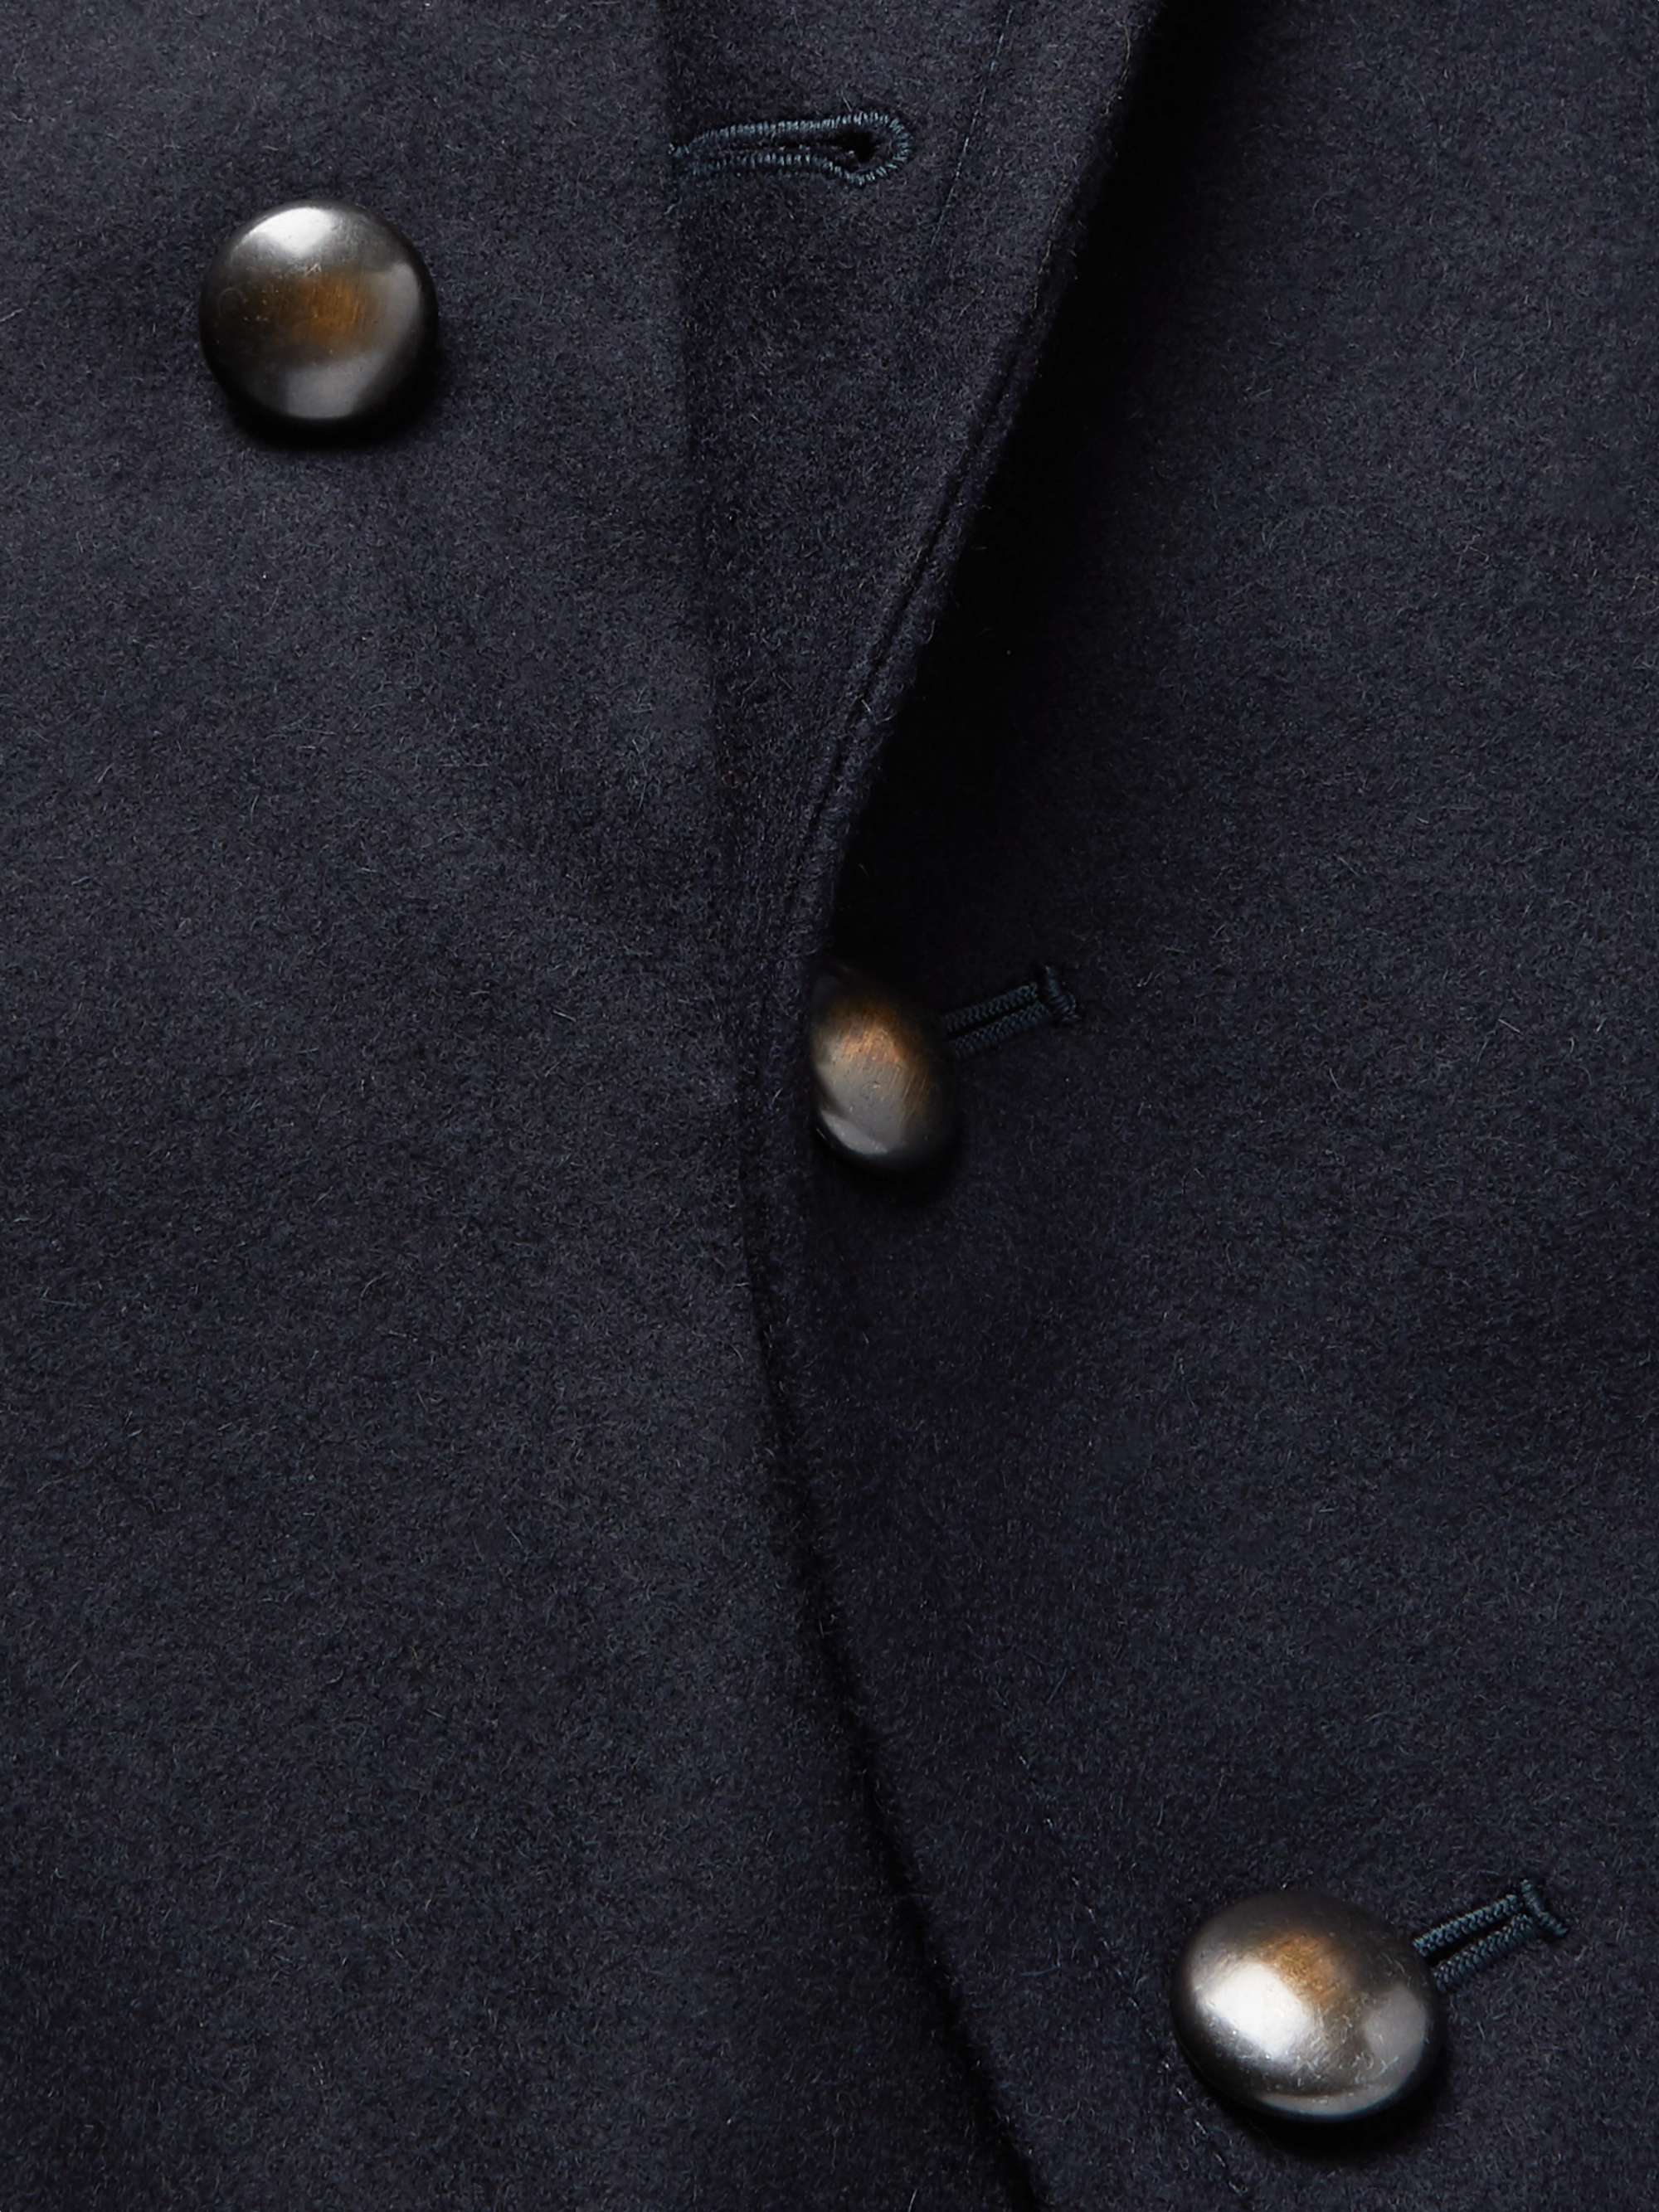 KINGSMAN Shola Slim-Fit Wool and Alpaca-Blend Coat